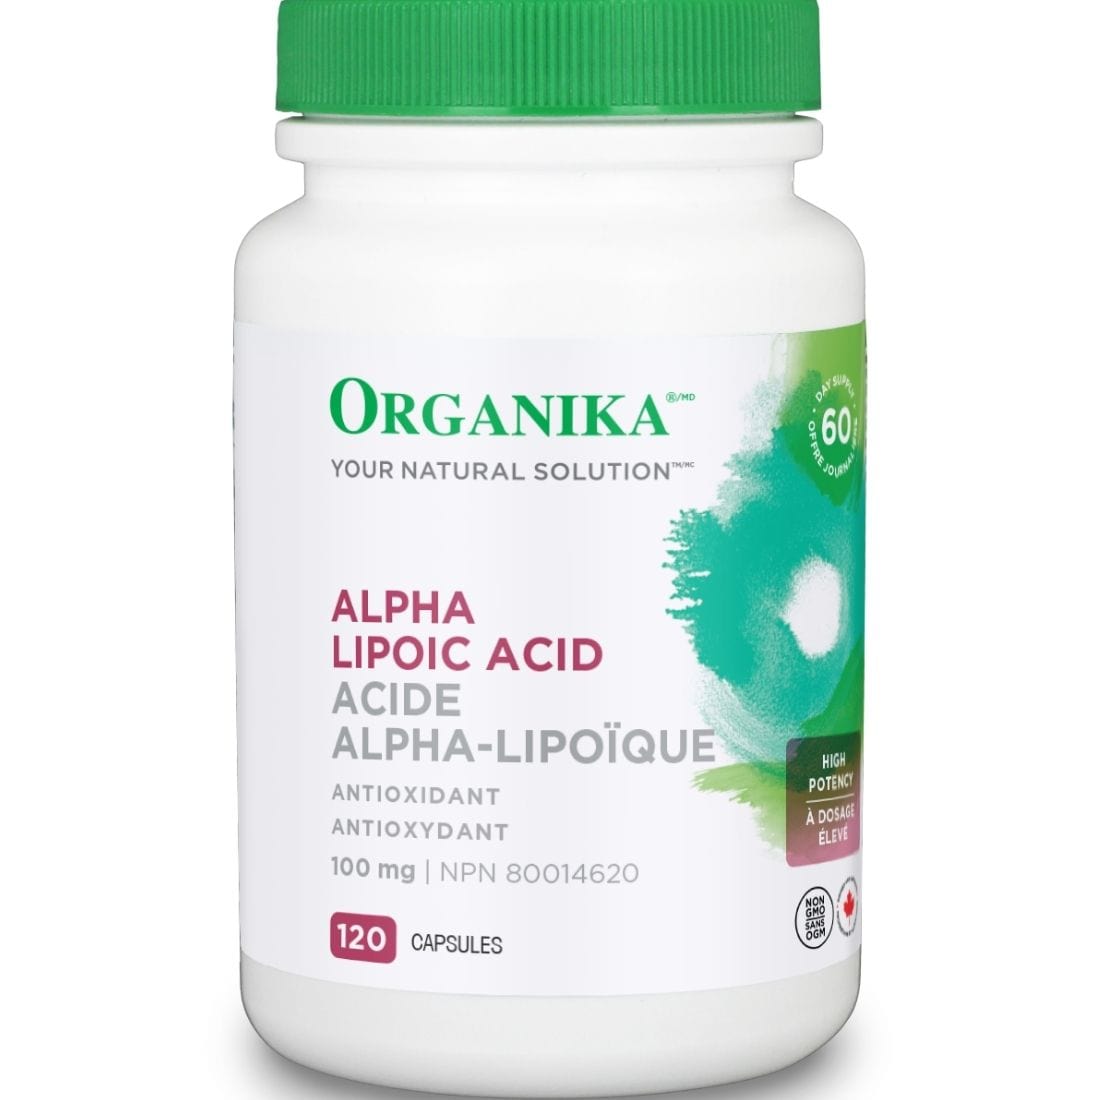 Organika Alpha Lipoic Acid, 100mg